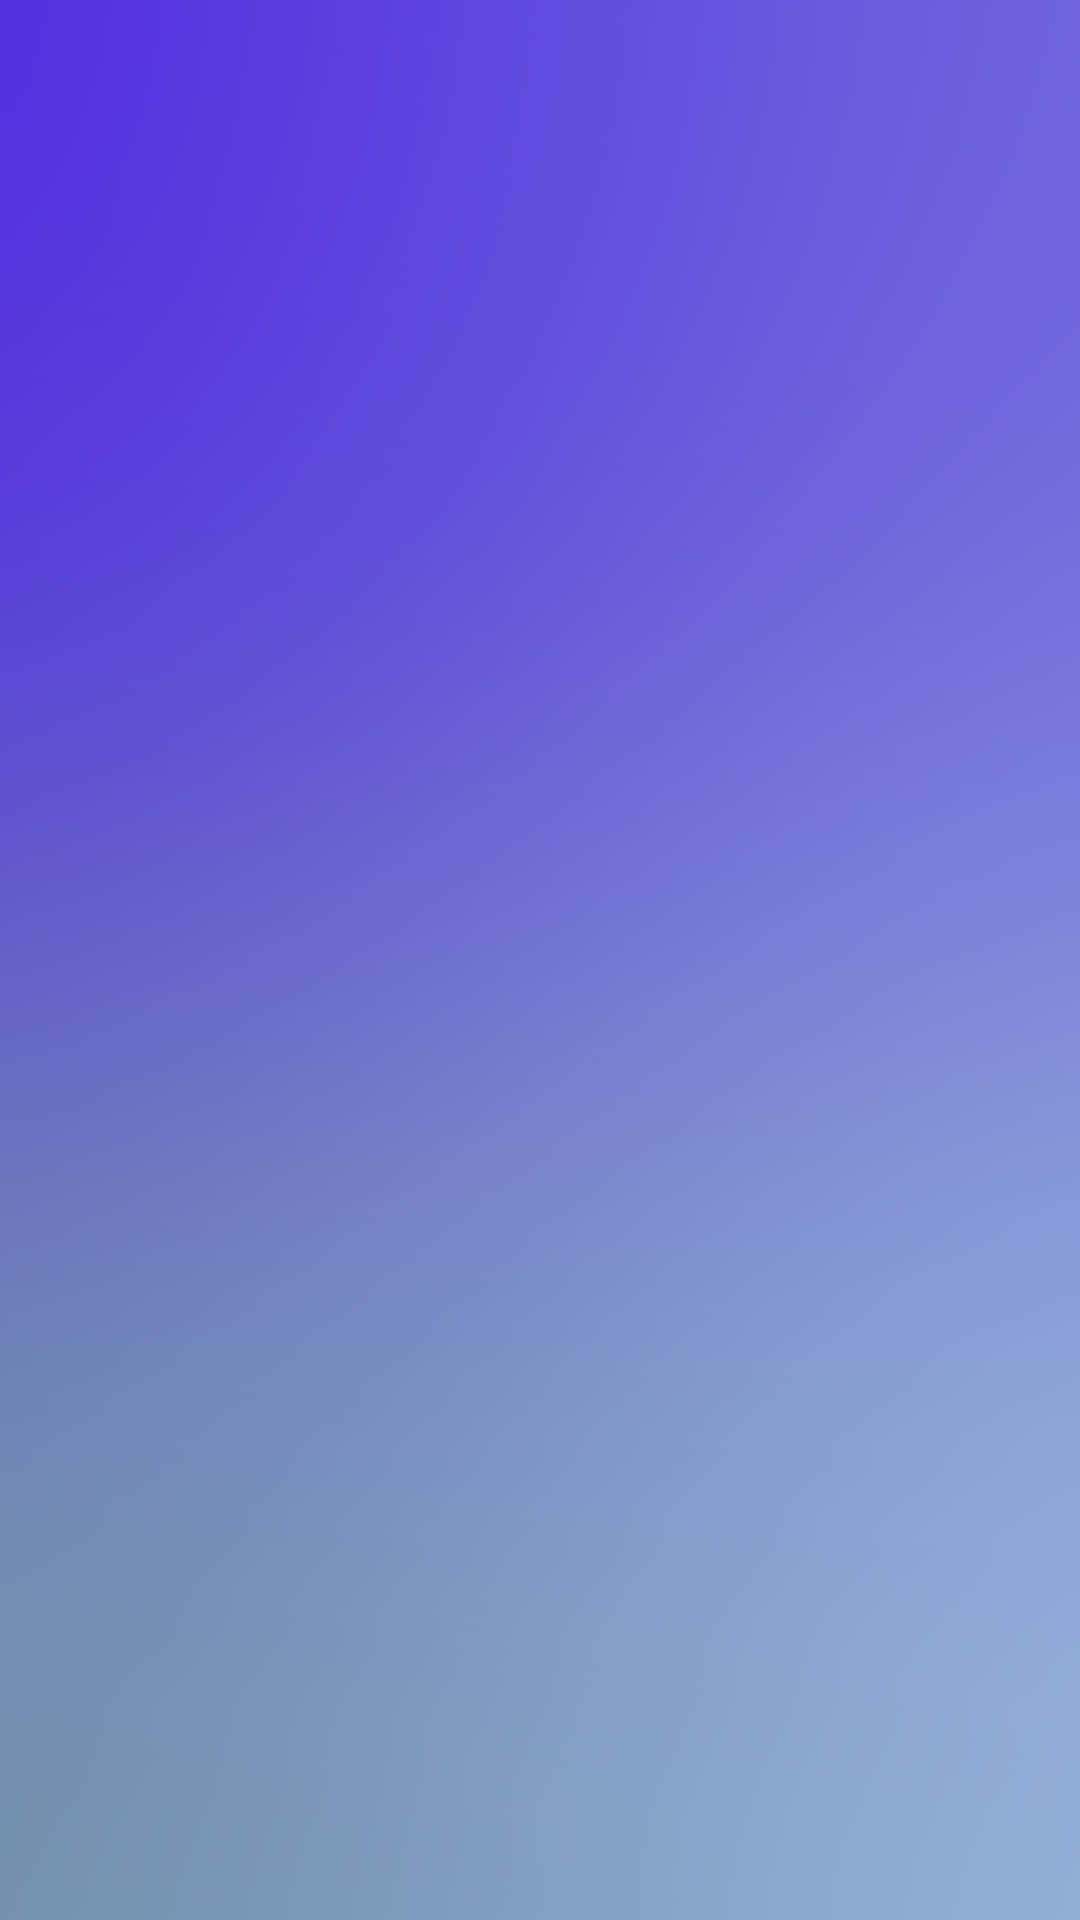 Blue Ombre Background Indigo To Light Blue Surface